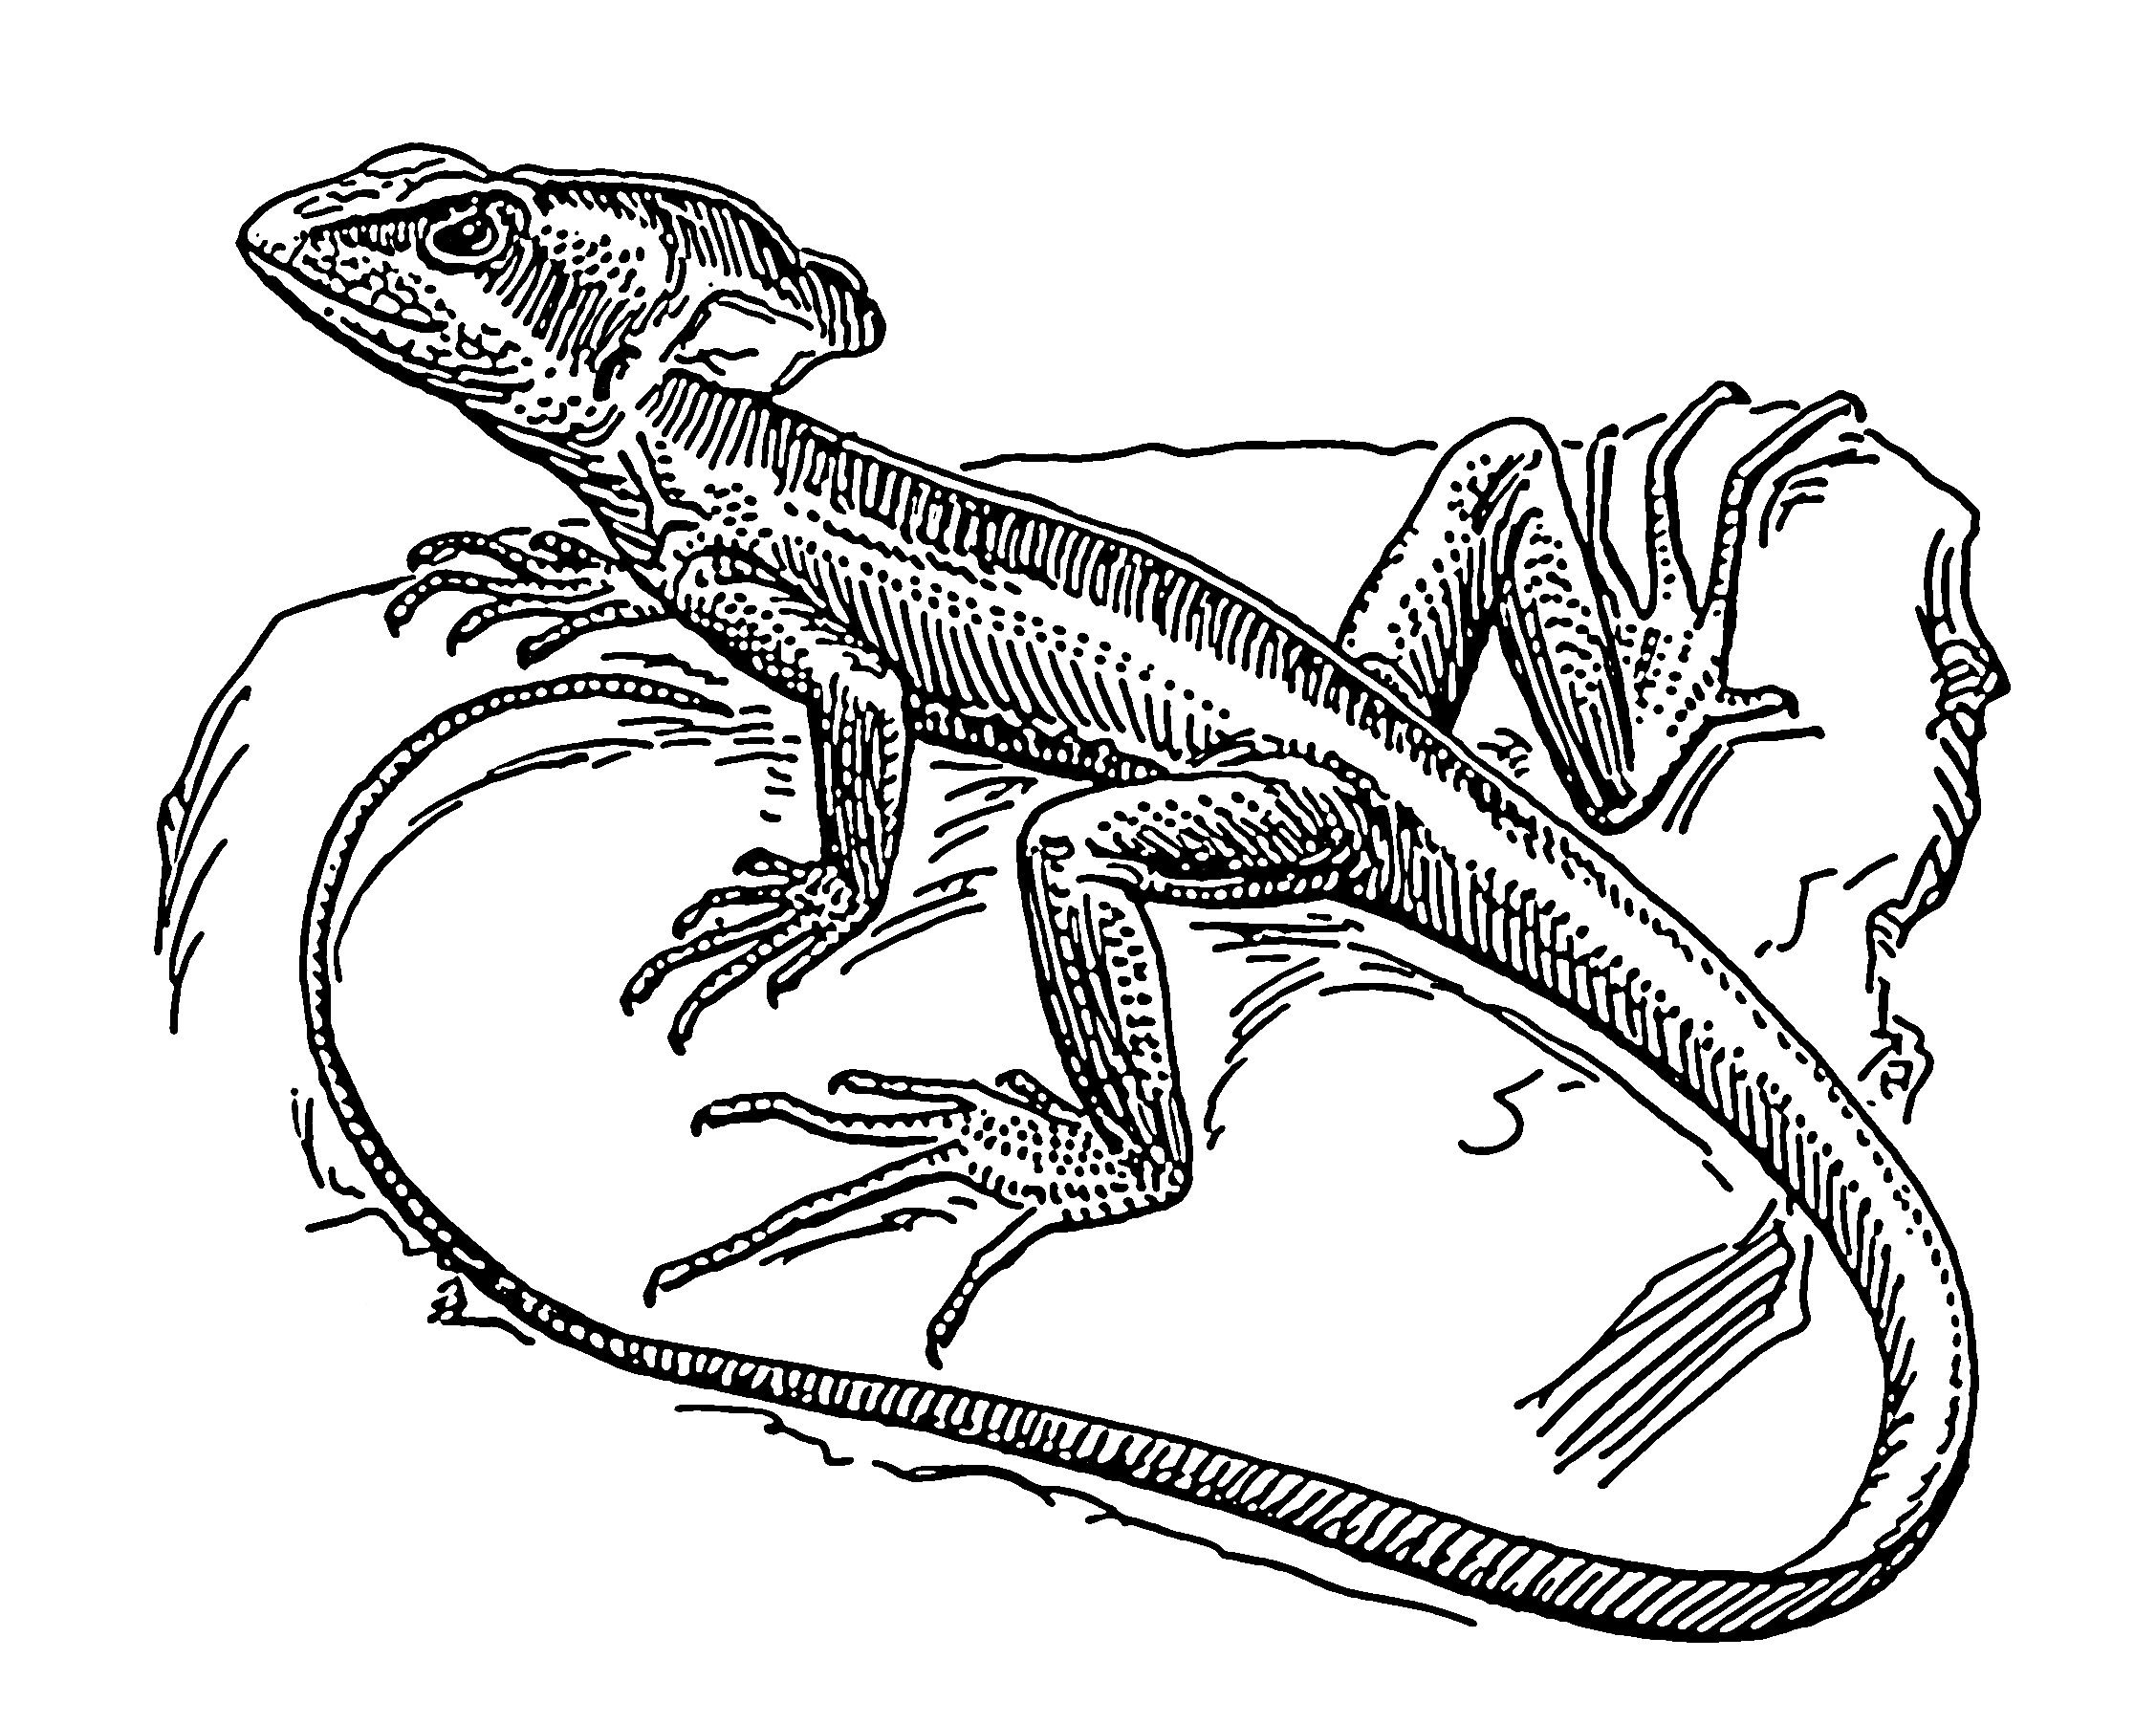 Lizard Line Drawing at GetDrawings | Free download